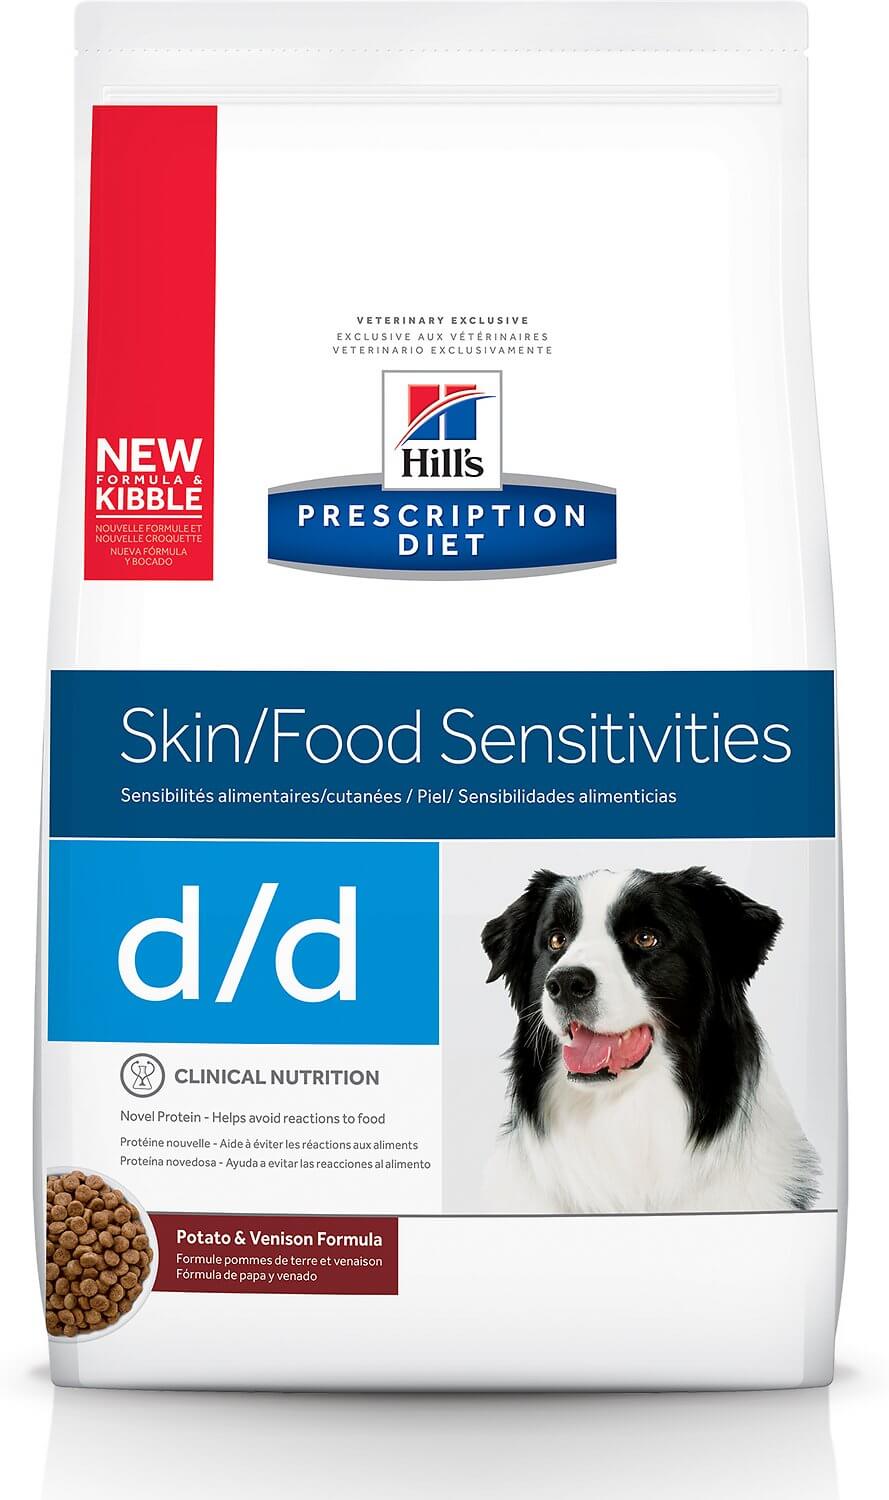 Hill’s Prescription Diet D/D Canine Dog Food Review (Dry)